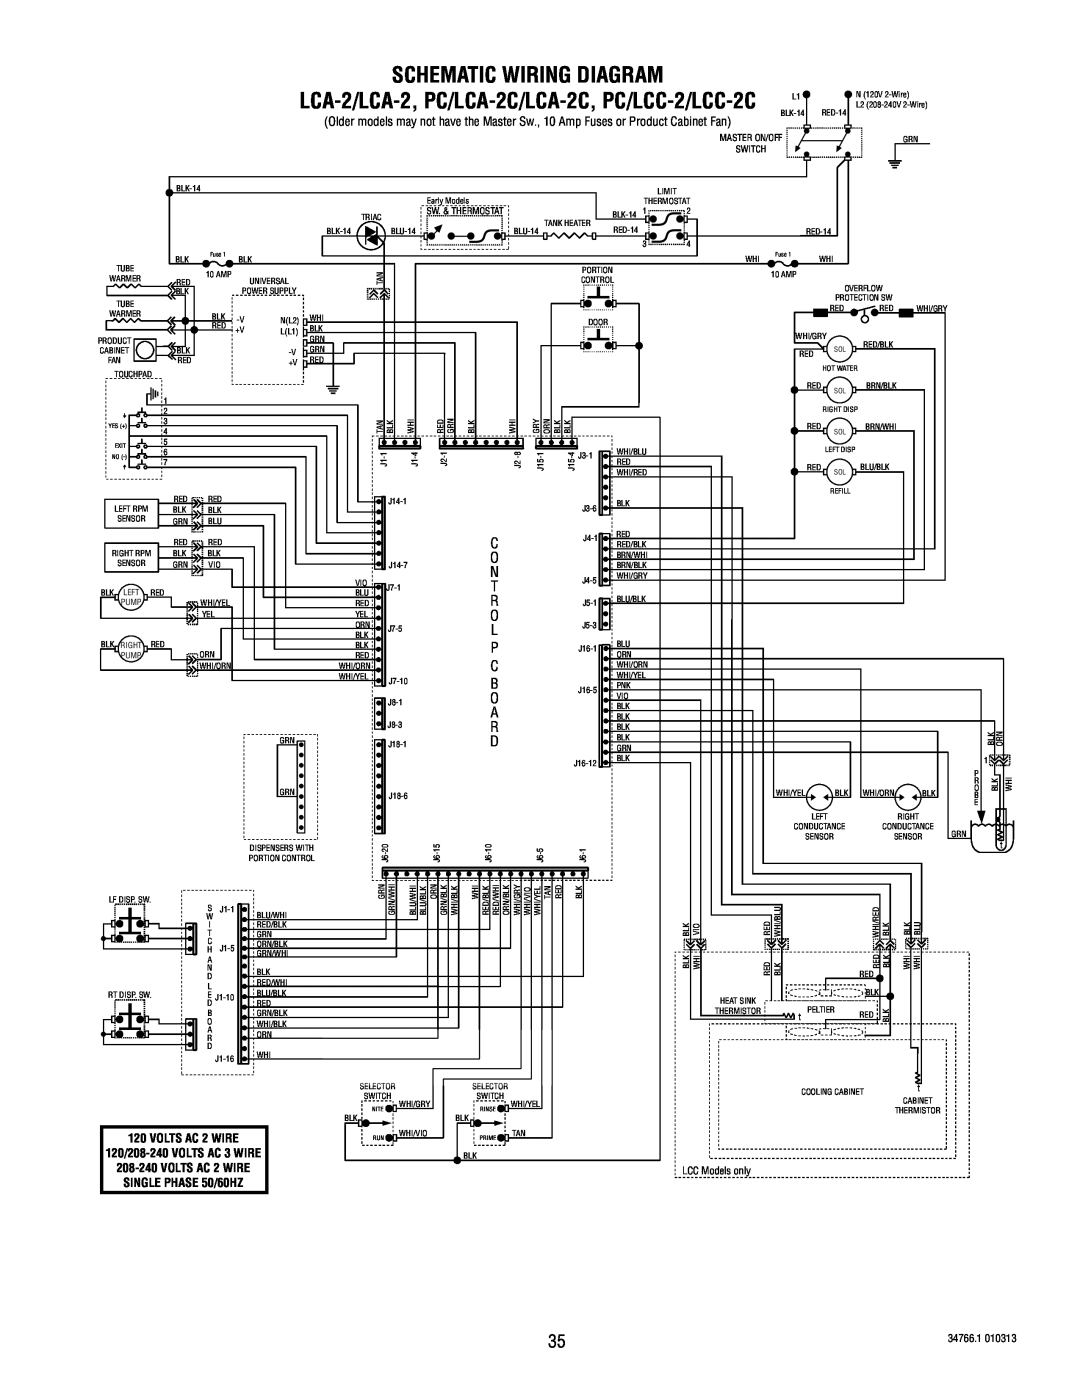 Bunn LCA-2 PC Schematic Wiring Diagram, LCA-2/LCA-2, PC/LCA-2C/LCA-2C, PC/LCC-2/LCC-2C, LCC Models only, 34766.1, Switch 